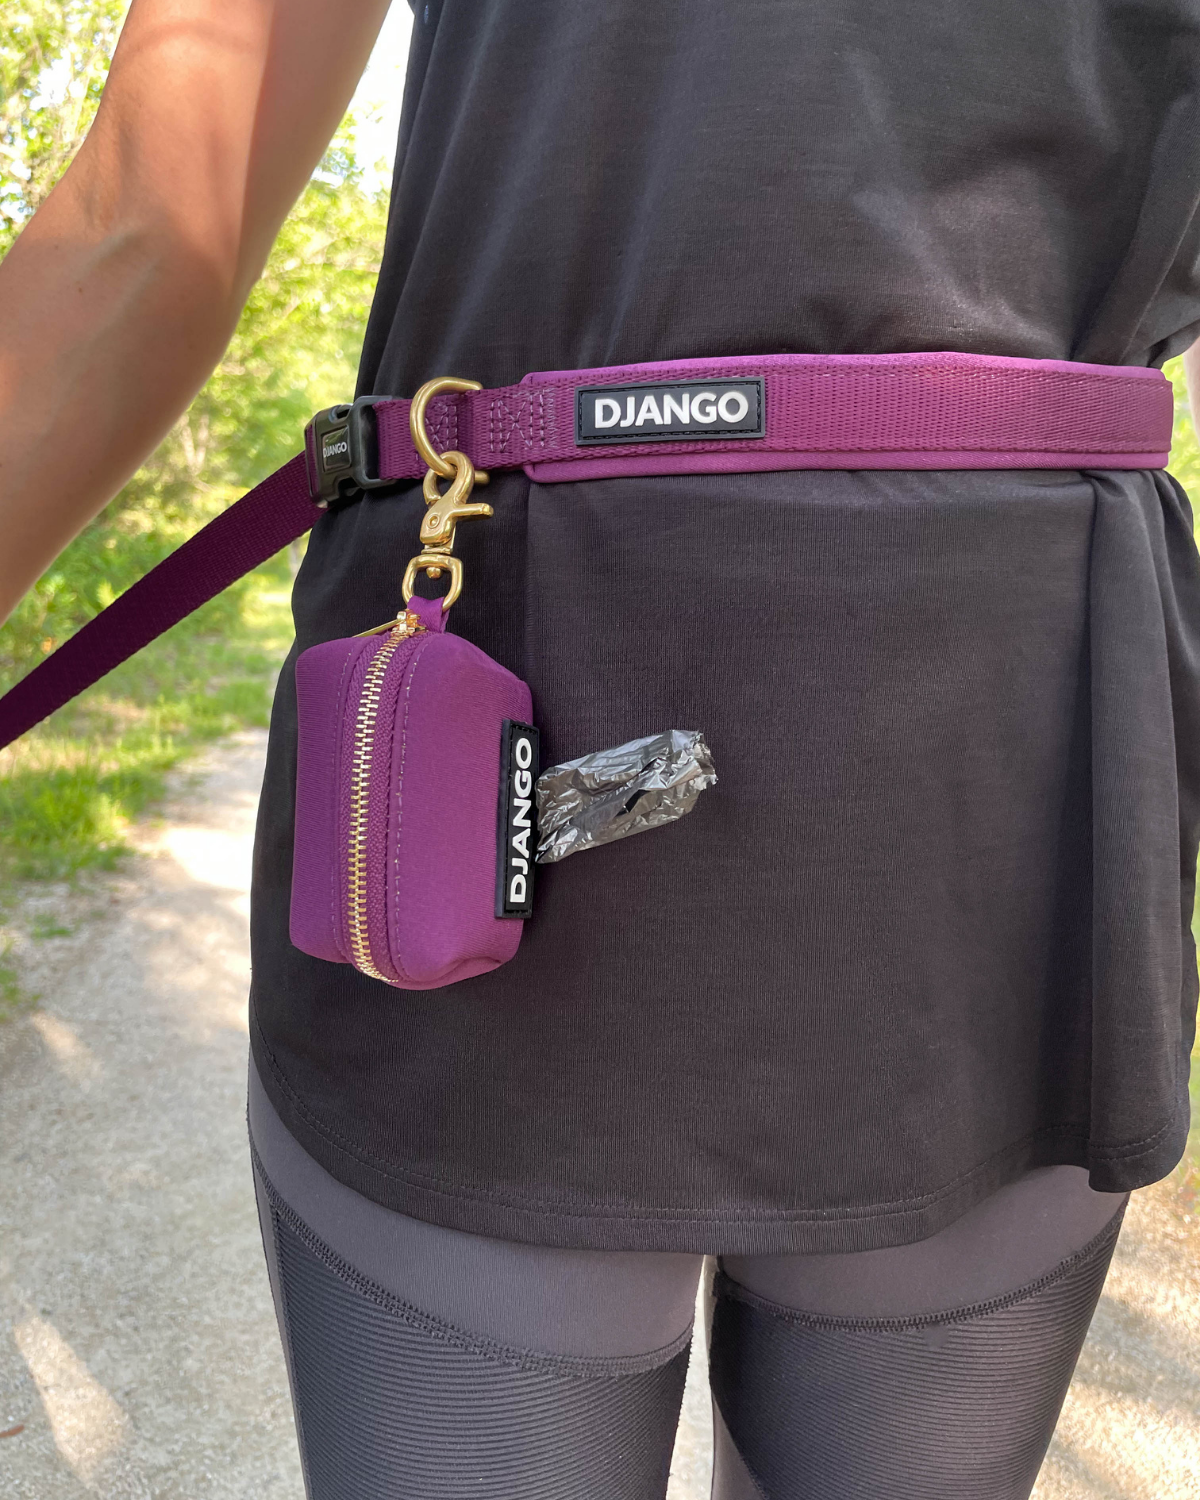 DJANGO Dog Waste Bag Holders - Chic and classy poop bag holder for dogs - Neoprene with beautiful solid brass hardware - djangobrand.com